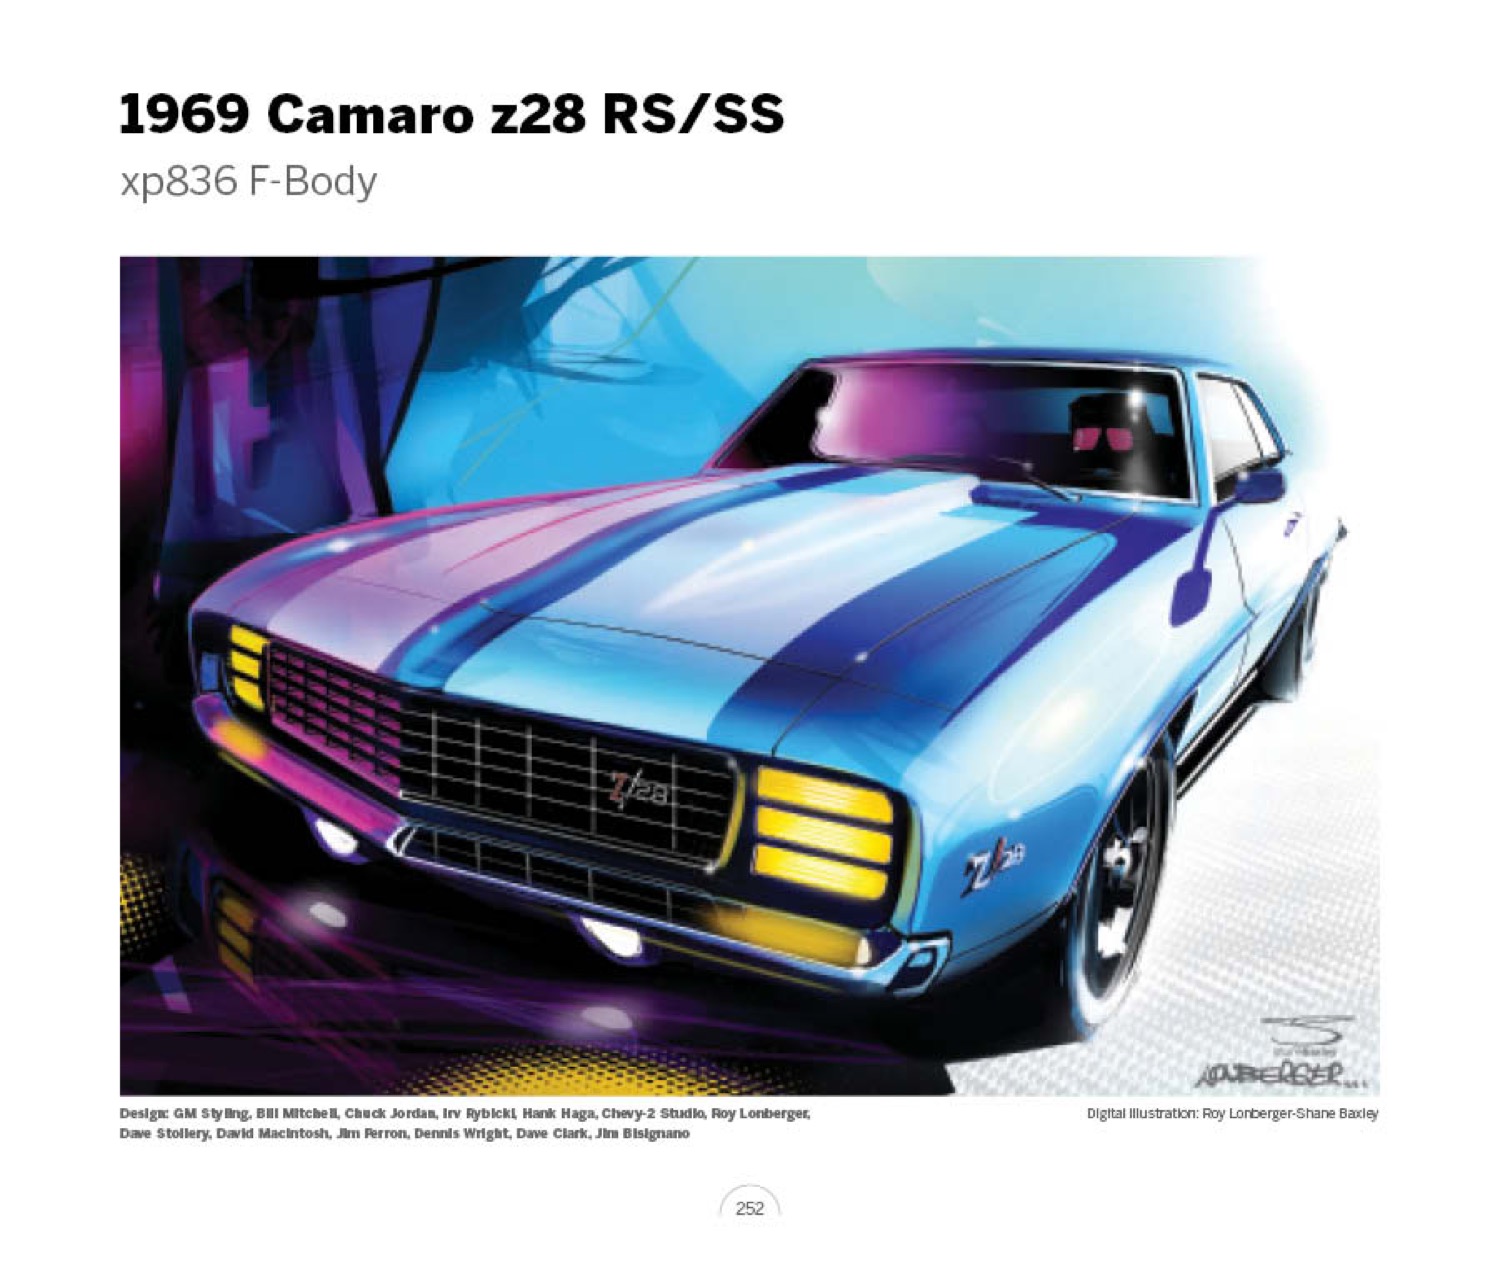 (40) 1969 Camaro xp836-sketch LoRez.jpg